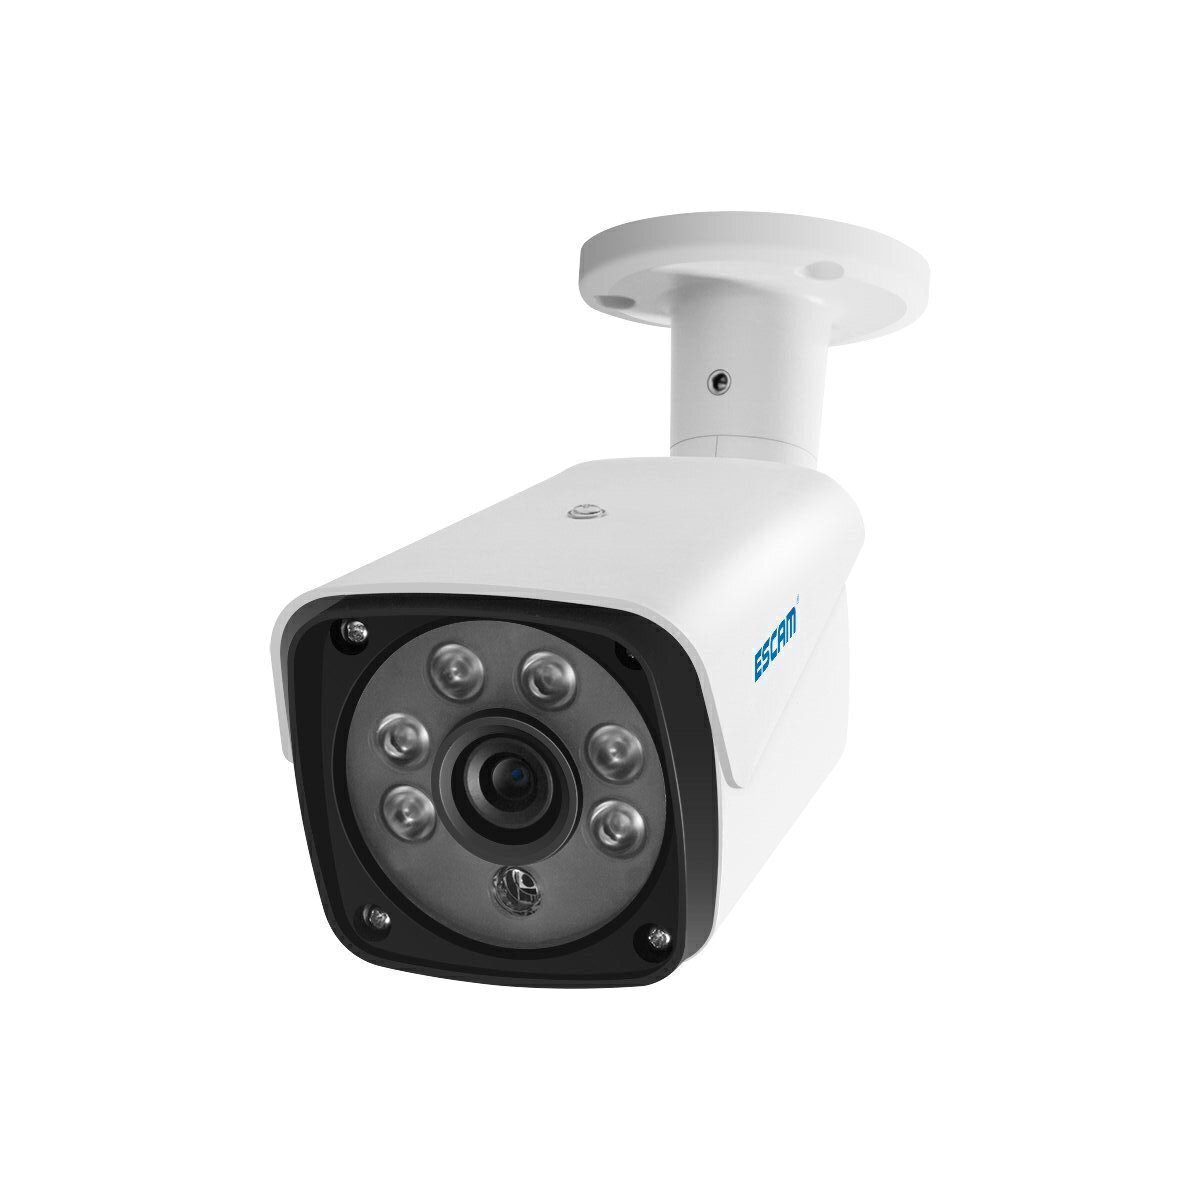 ESCAM QH002 HD 1080P IP Camera ONVIF H.265 P2P Outdoor Waterproof IR Bullet with Smart Analysis Function Surveillance Security Camera 61